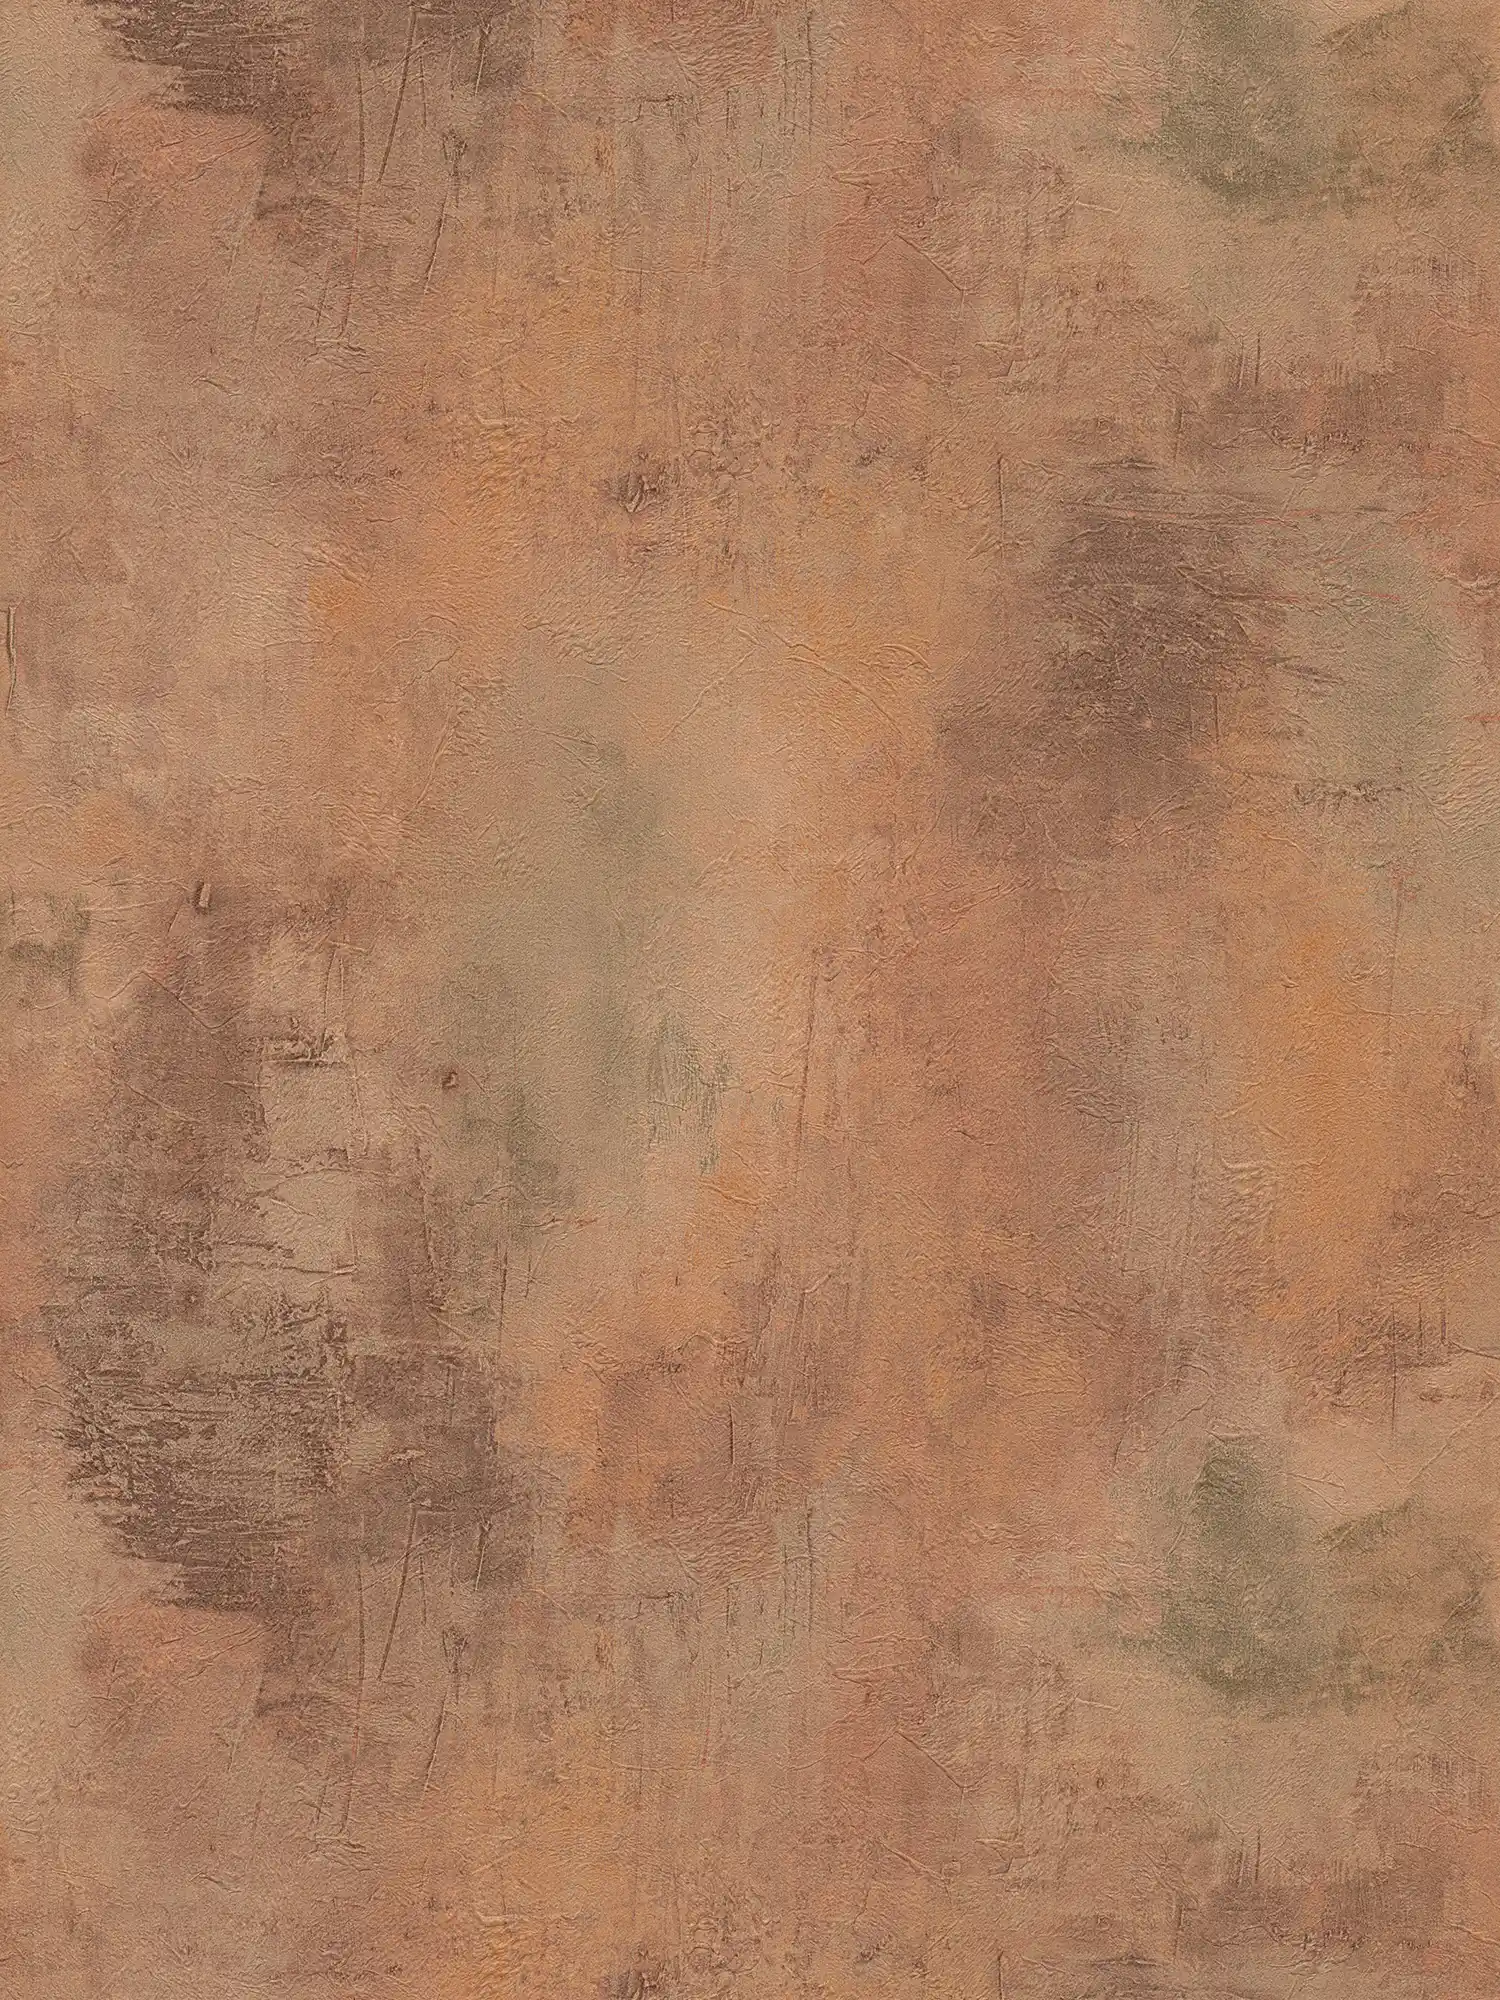 Wallpaper with rust pattern and metallic look - brown, orange, grey
